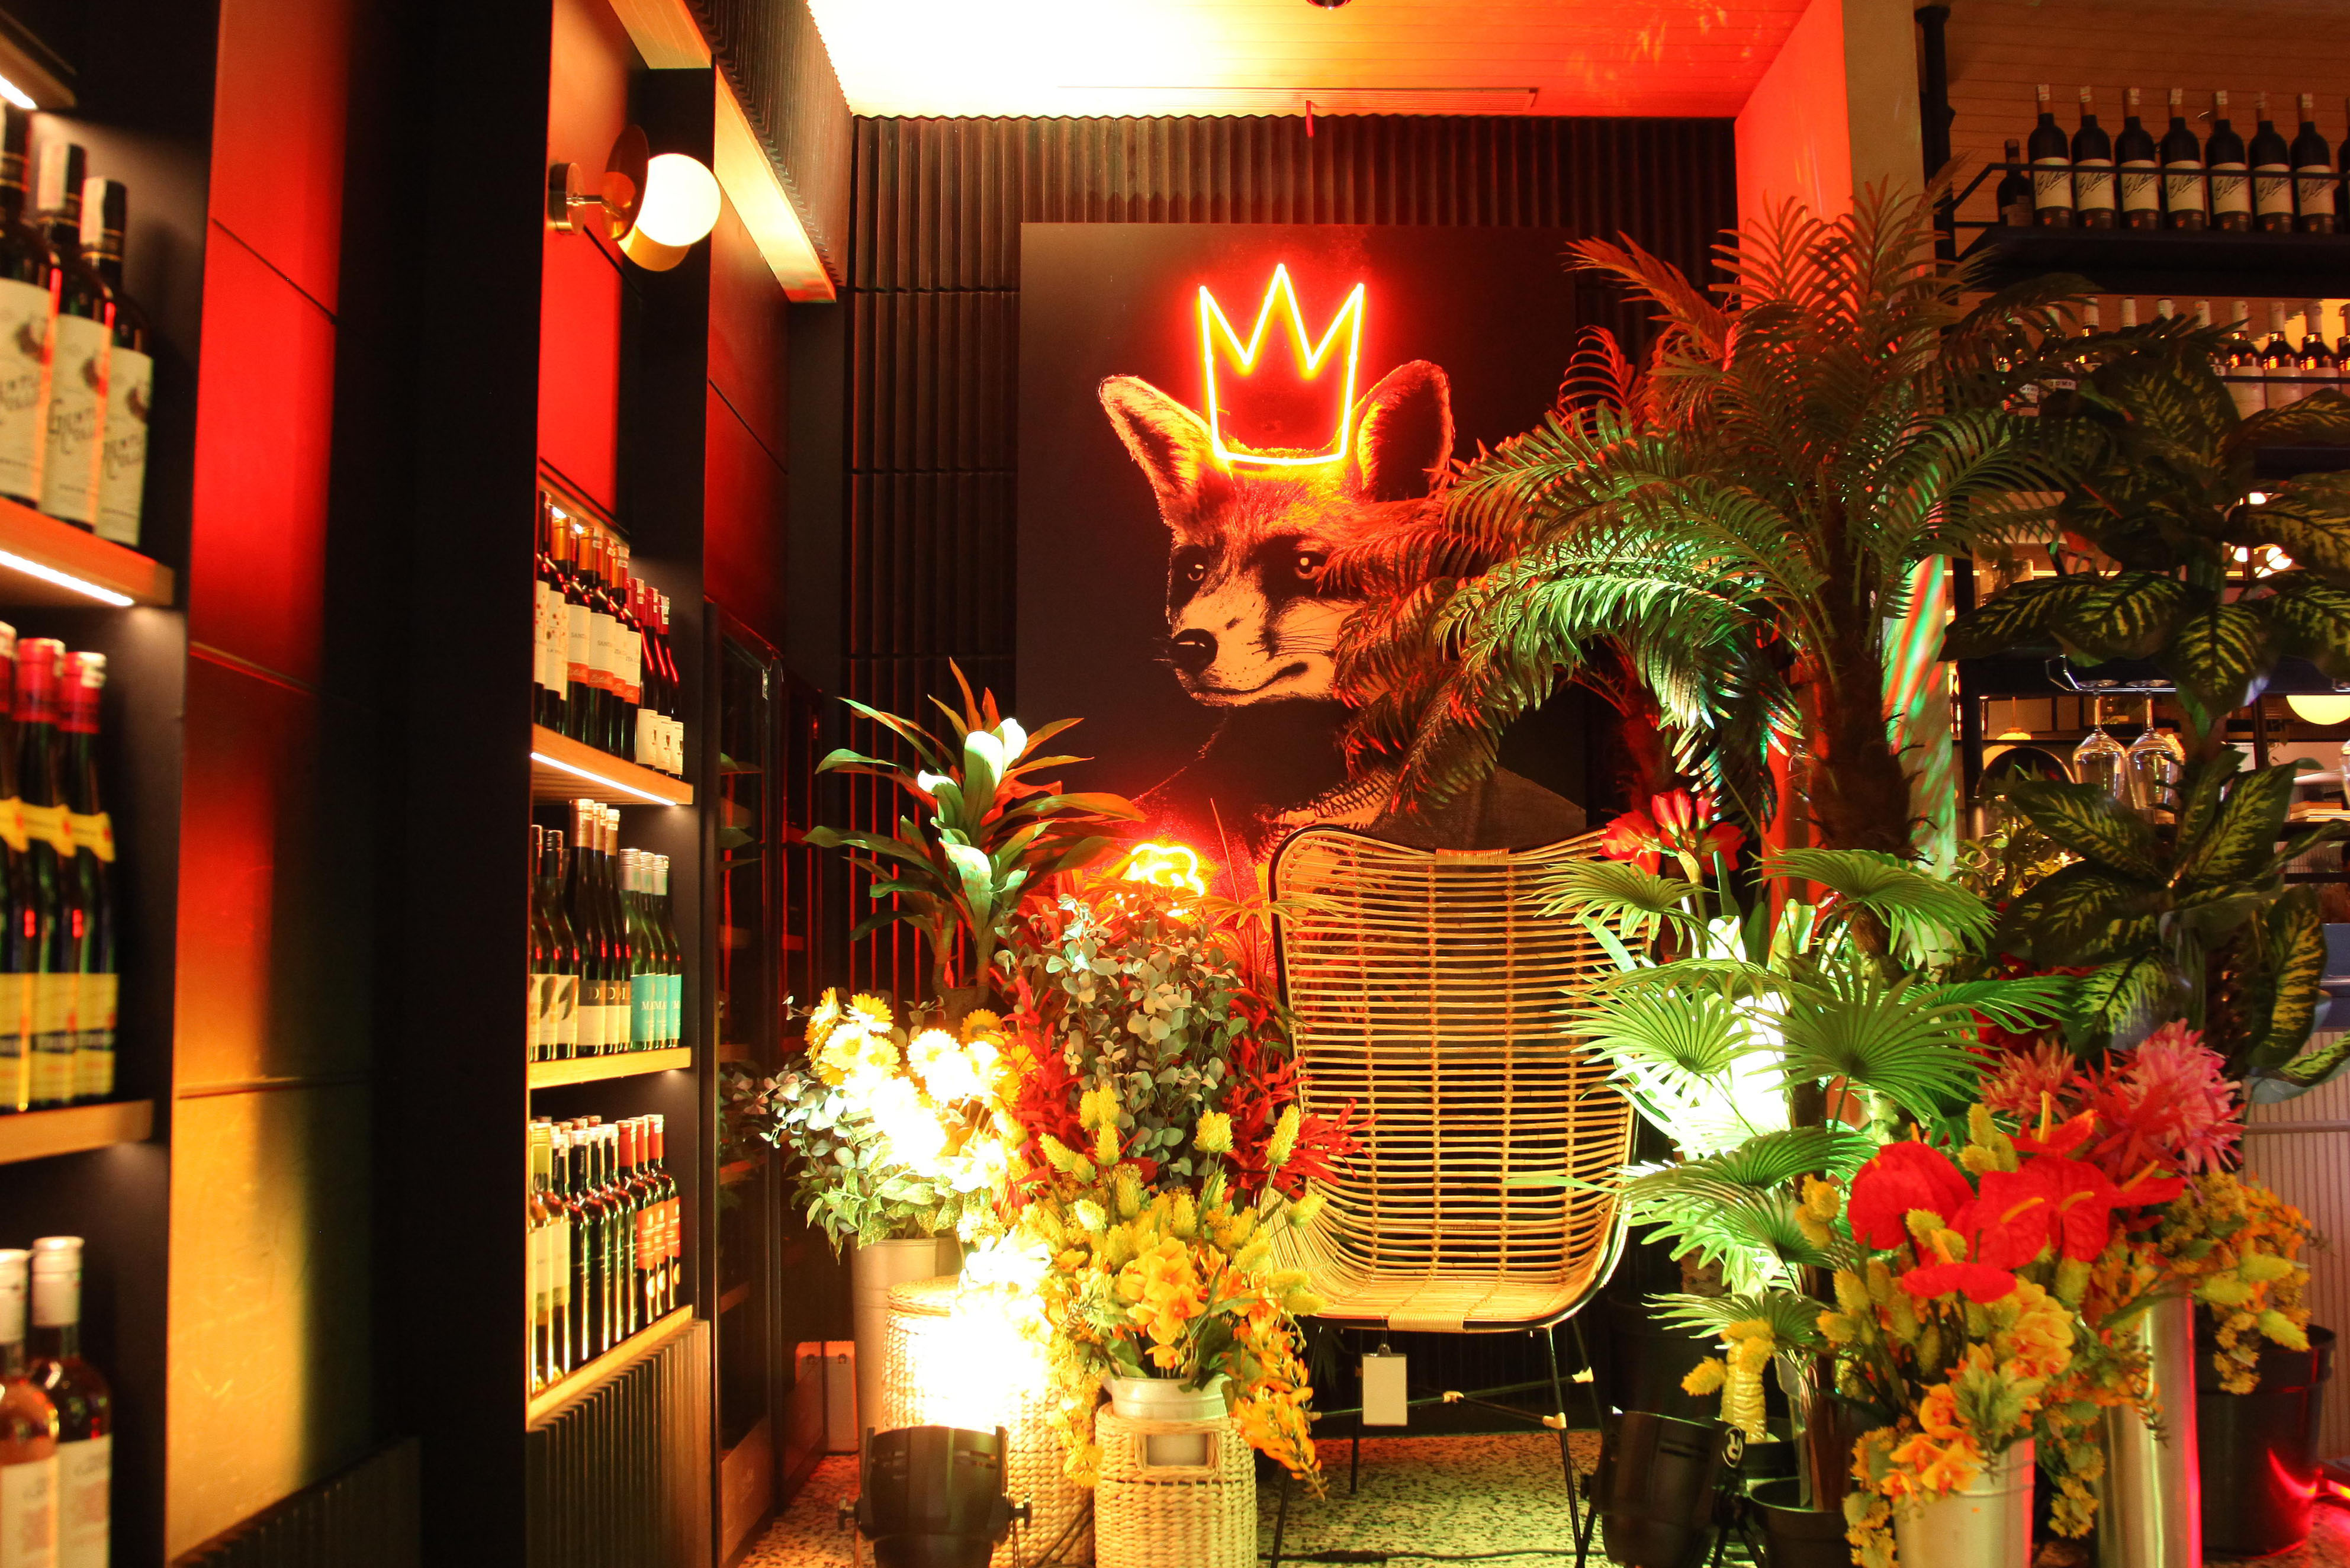 As The Best Bar and Restaurant in Surabaya, Mr. Fox celebrates its 1st anniversary